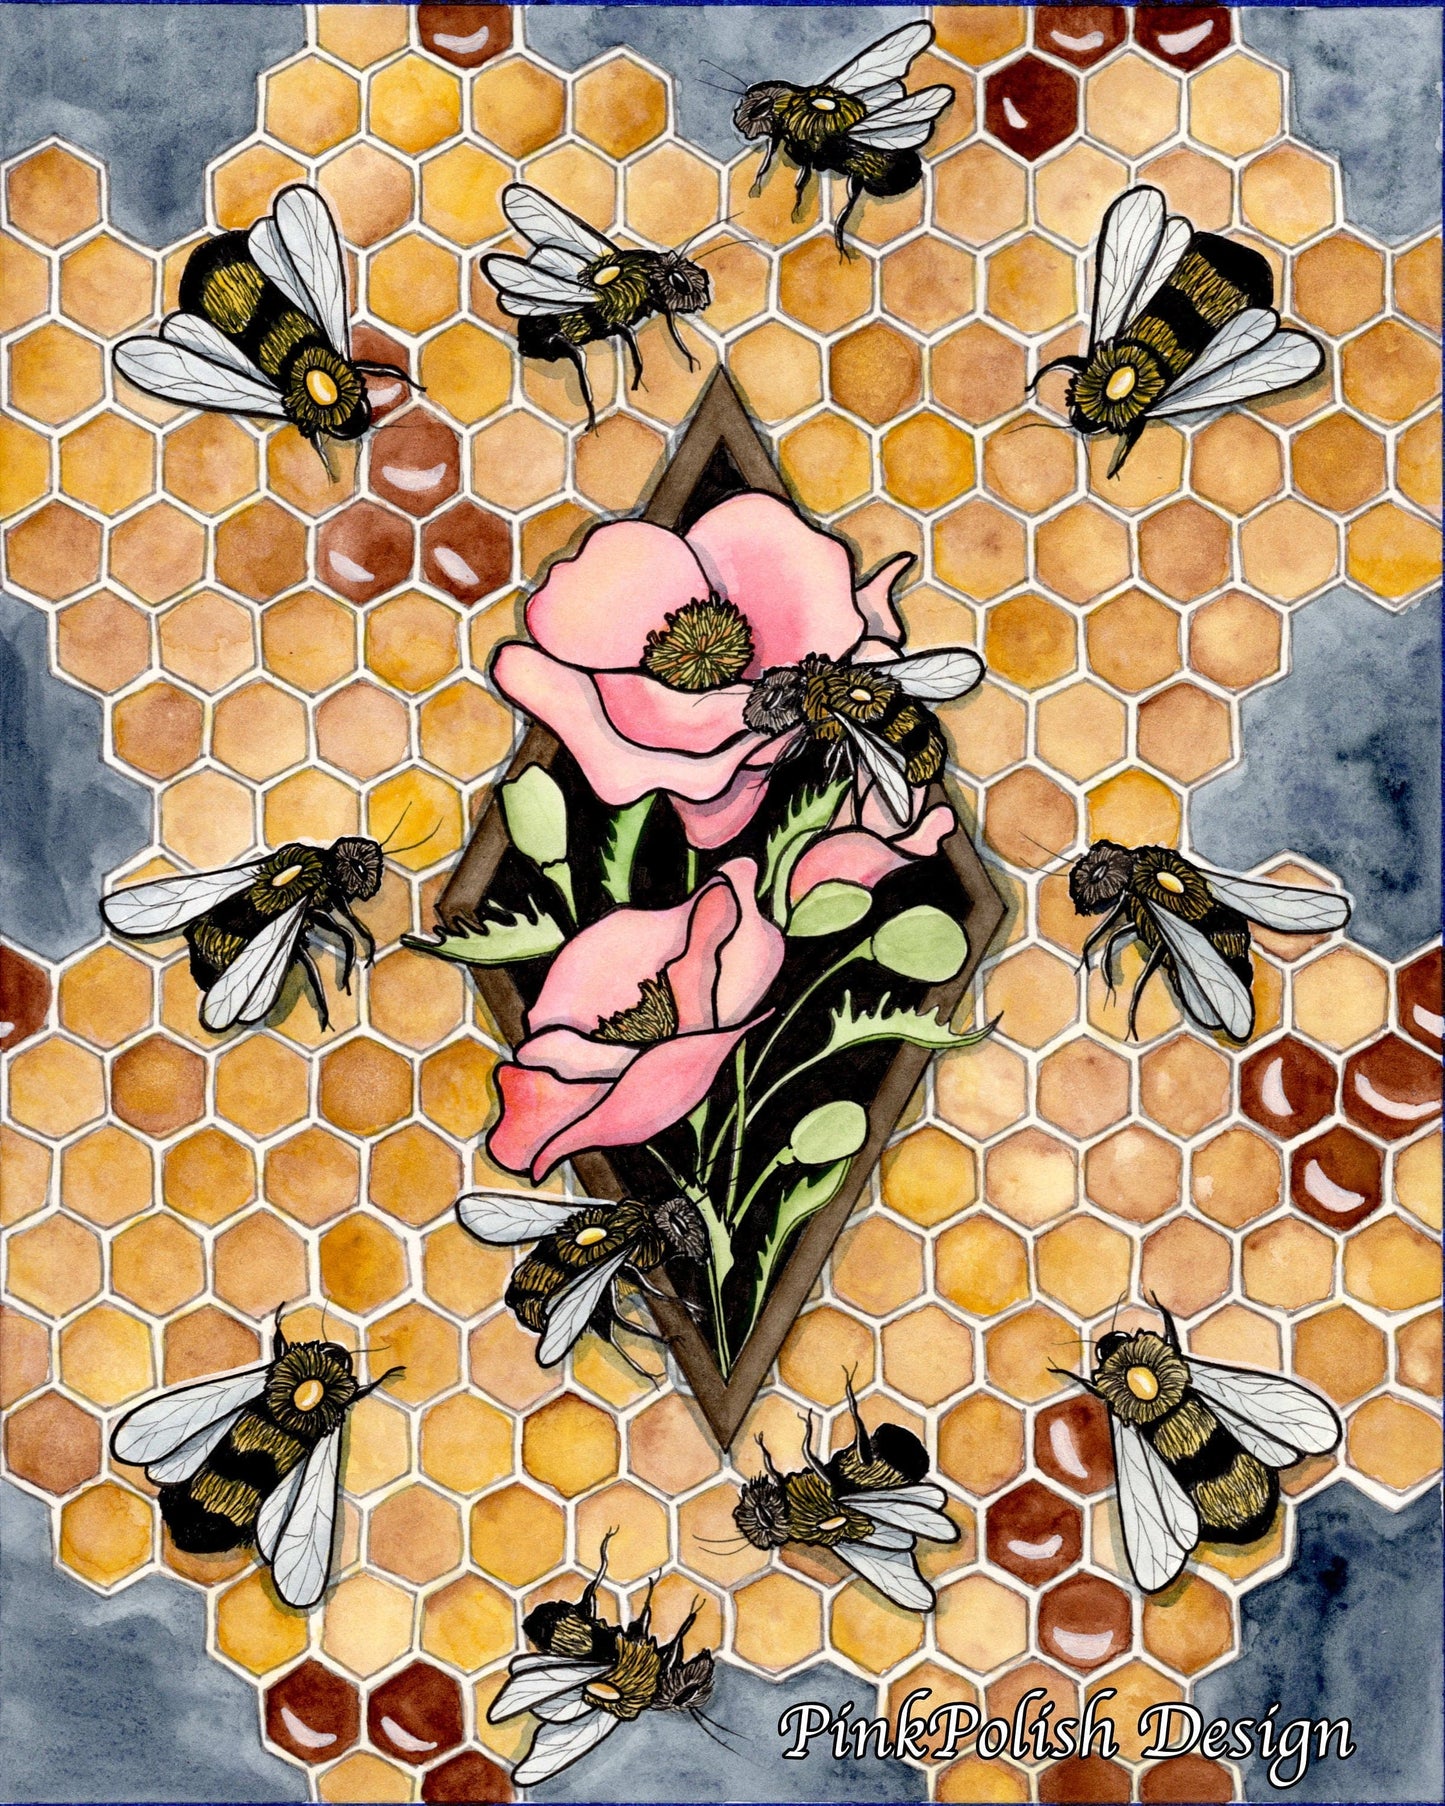 PinkPolish Design Art Prints "Bee Repetition"  Watercolor Painting: Art Print